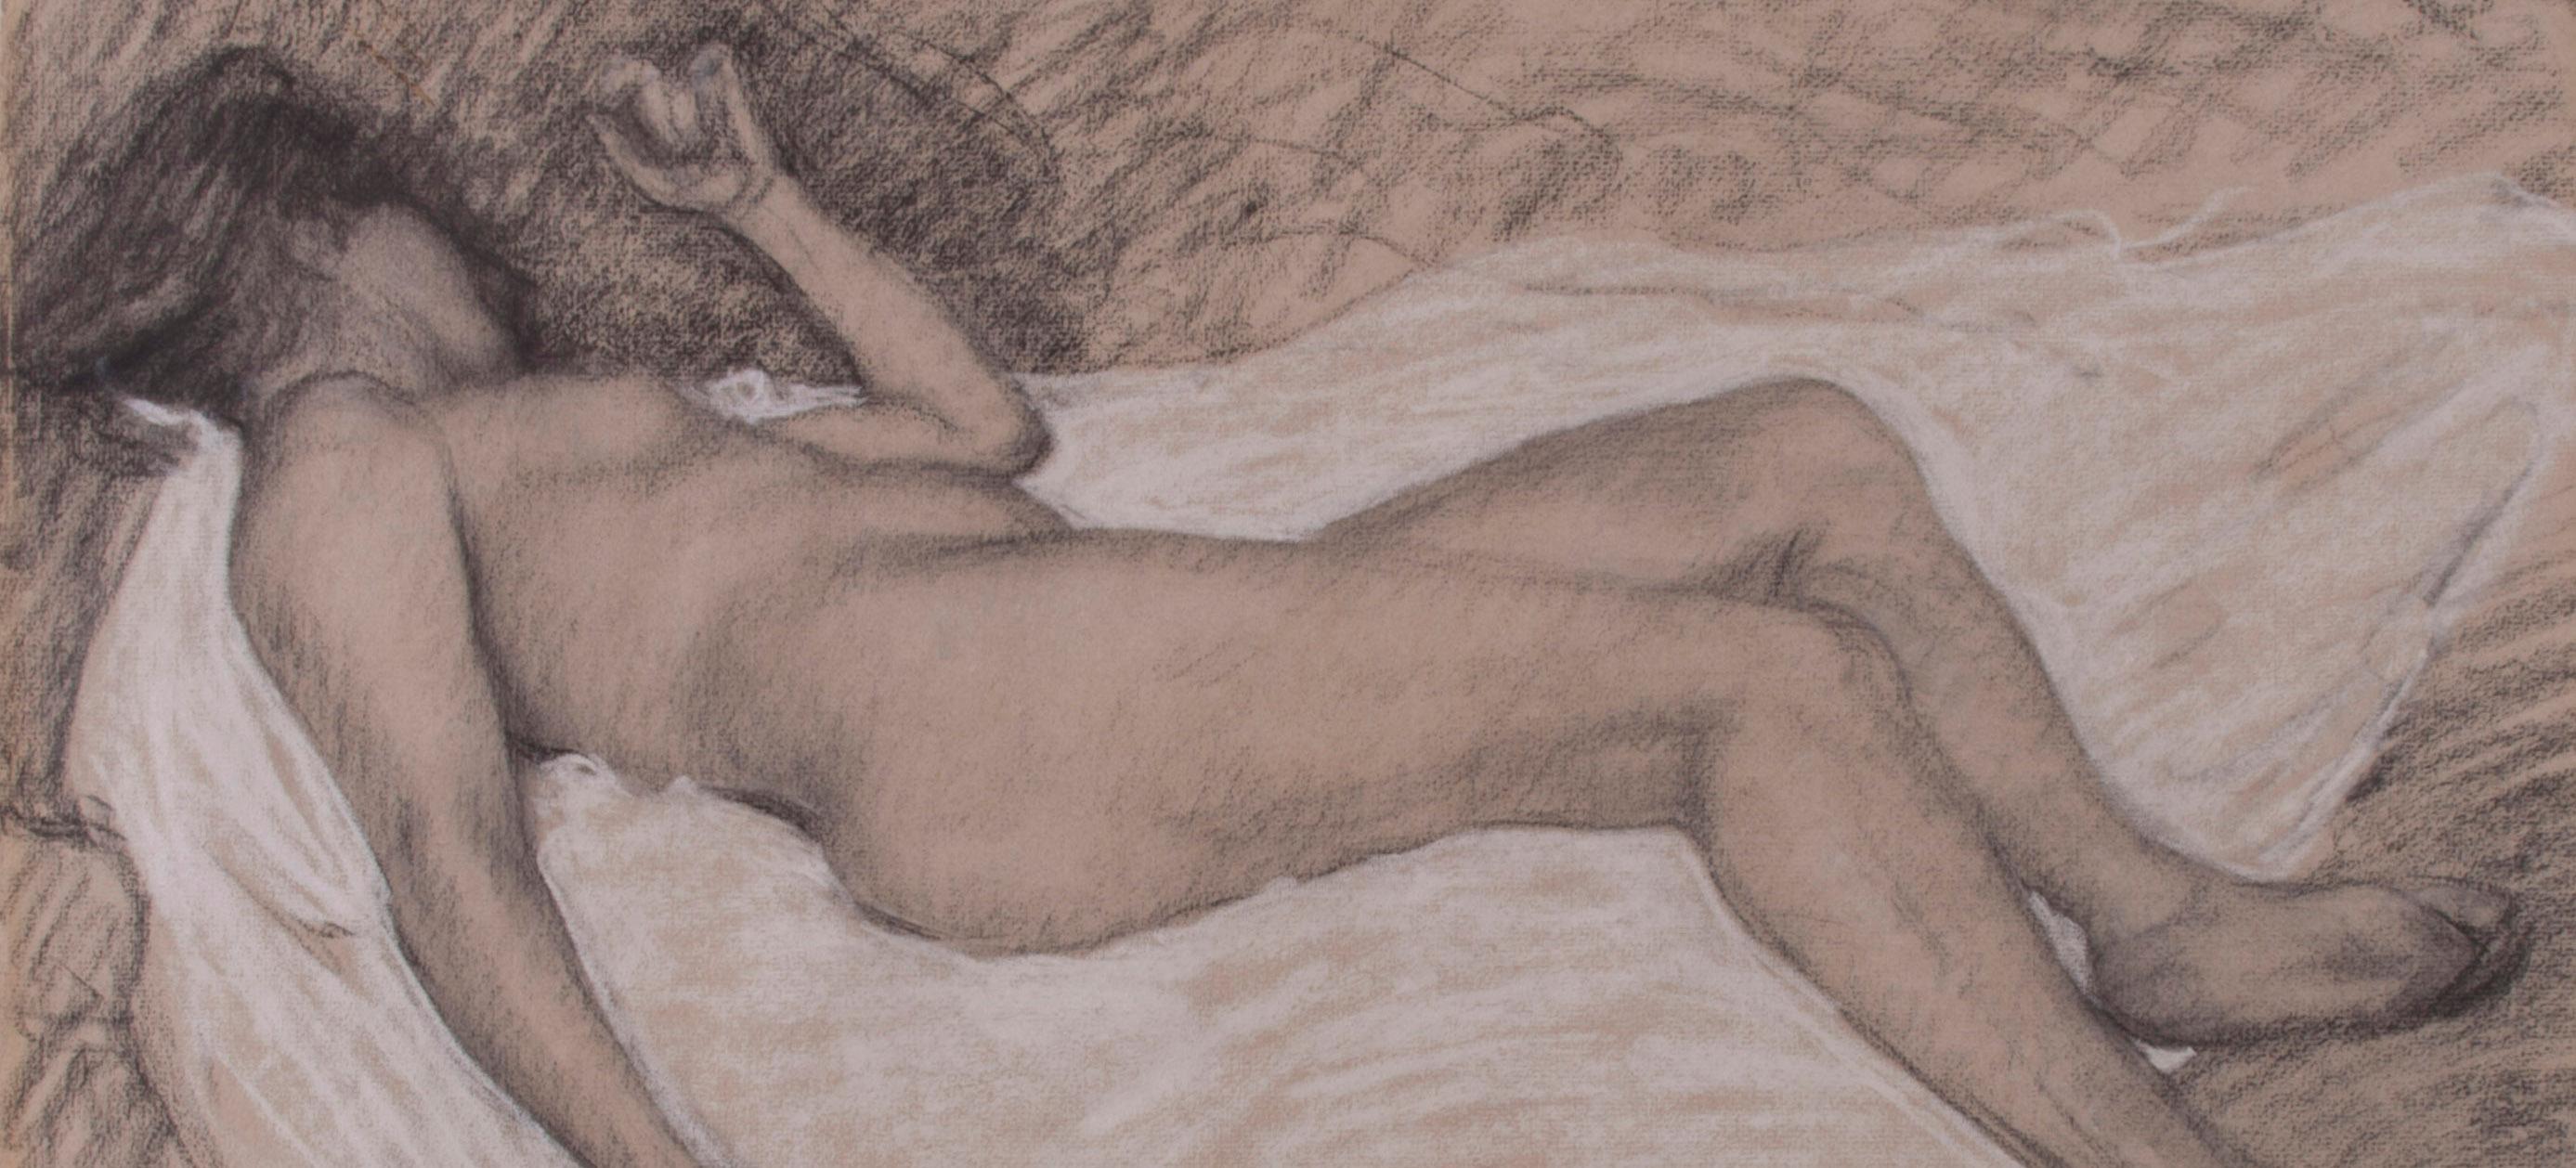 Femme nue de dos allongee - French School Art by Théophile Alexandre Steinlen